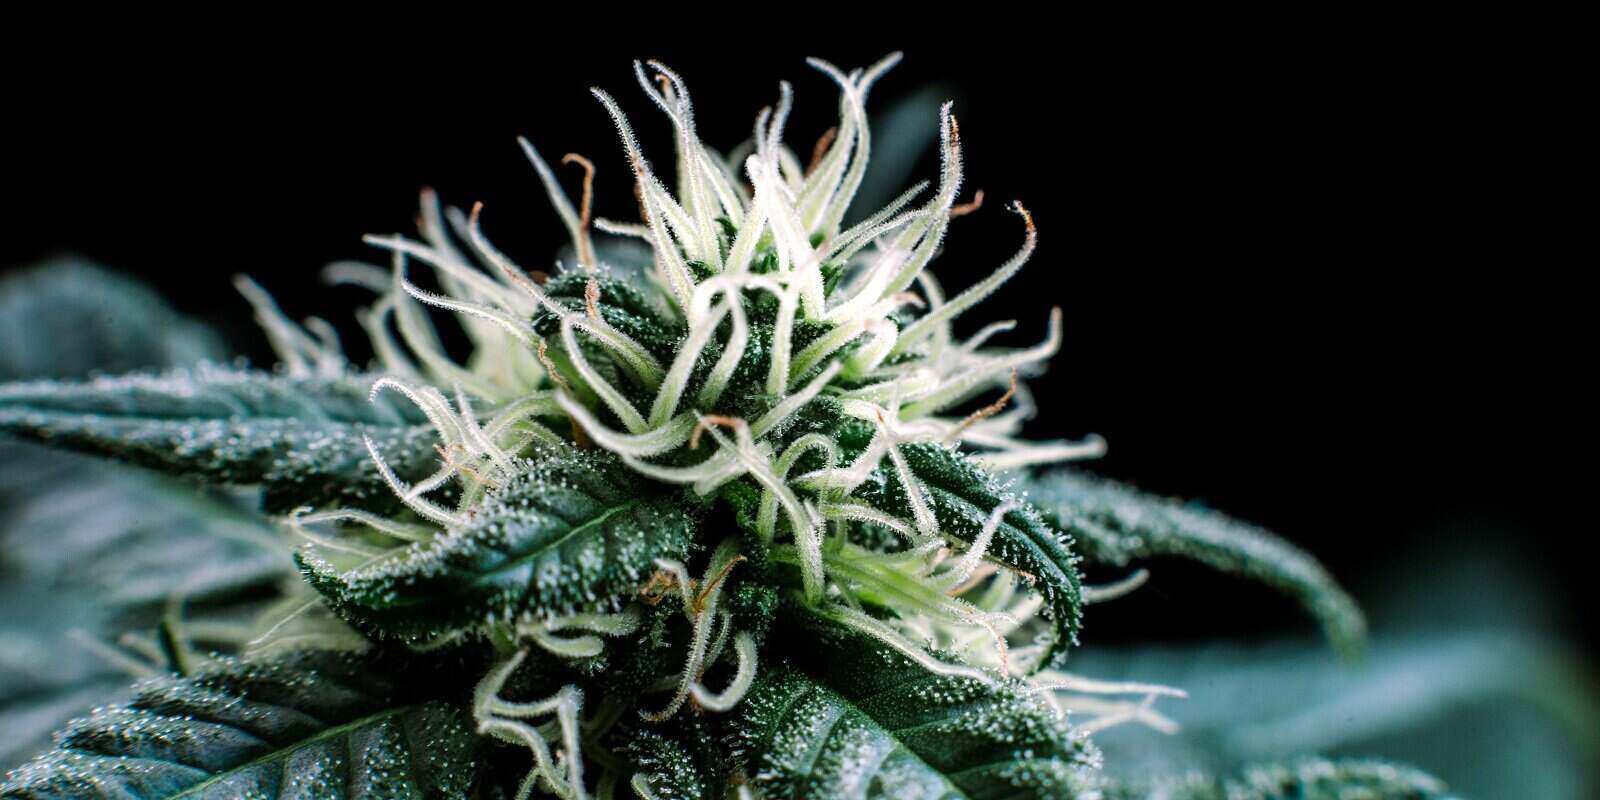 bud cannabis plant flowering when growing marijuana